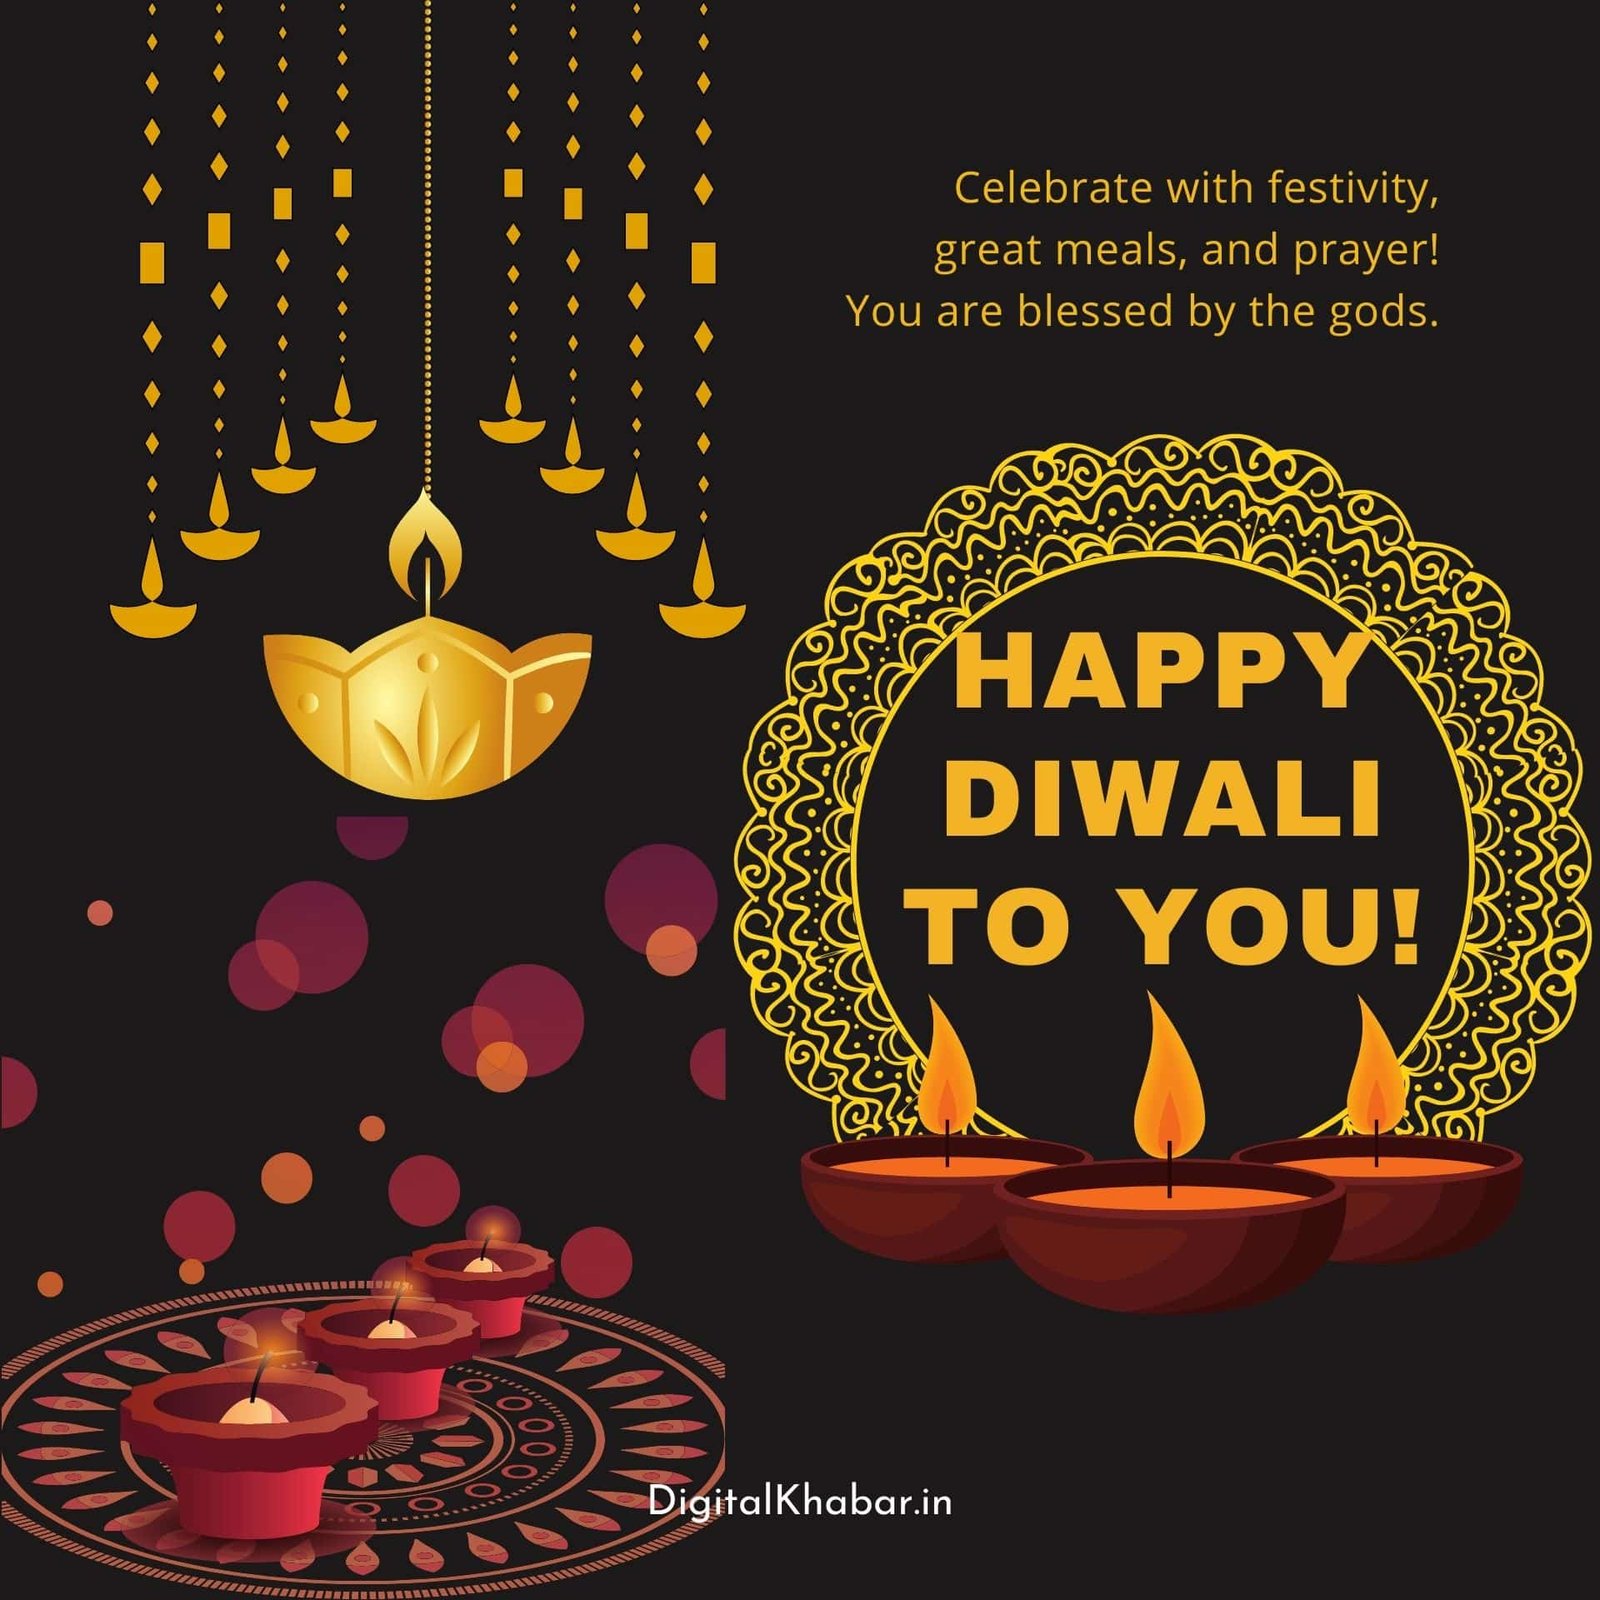 Diwali images hd